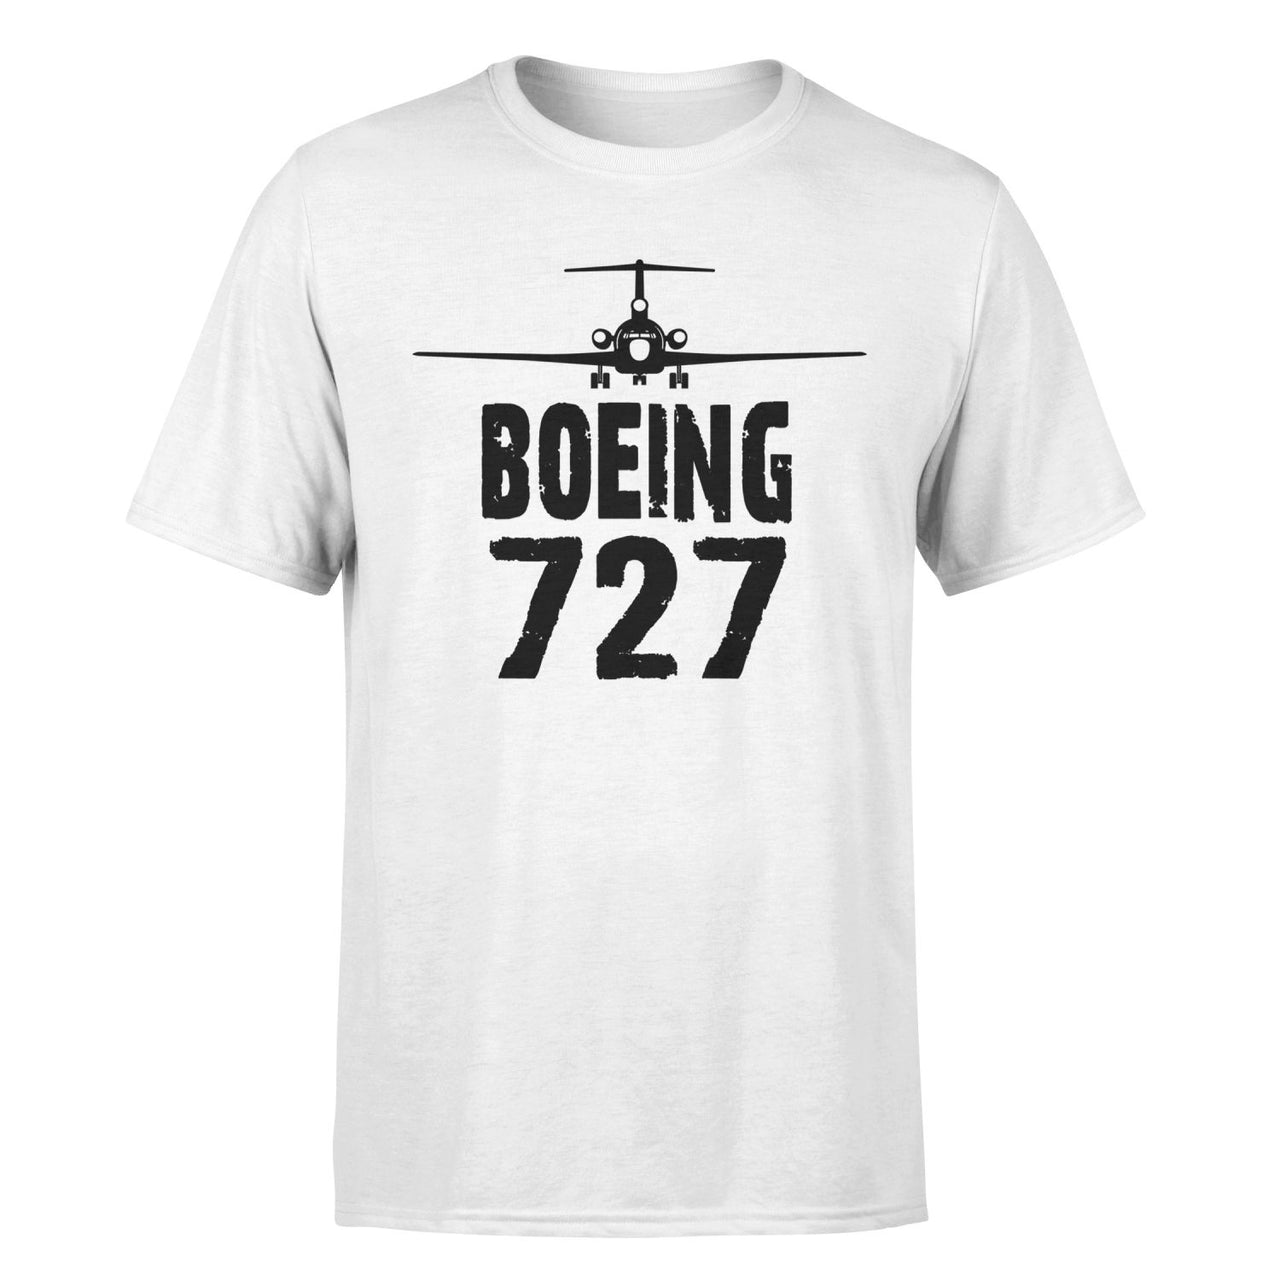 Boeing 727 & Plane Designed T-Shirts